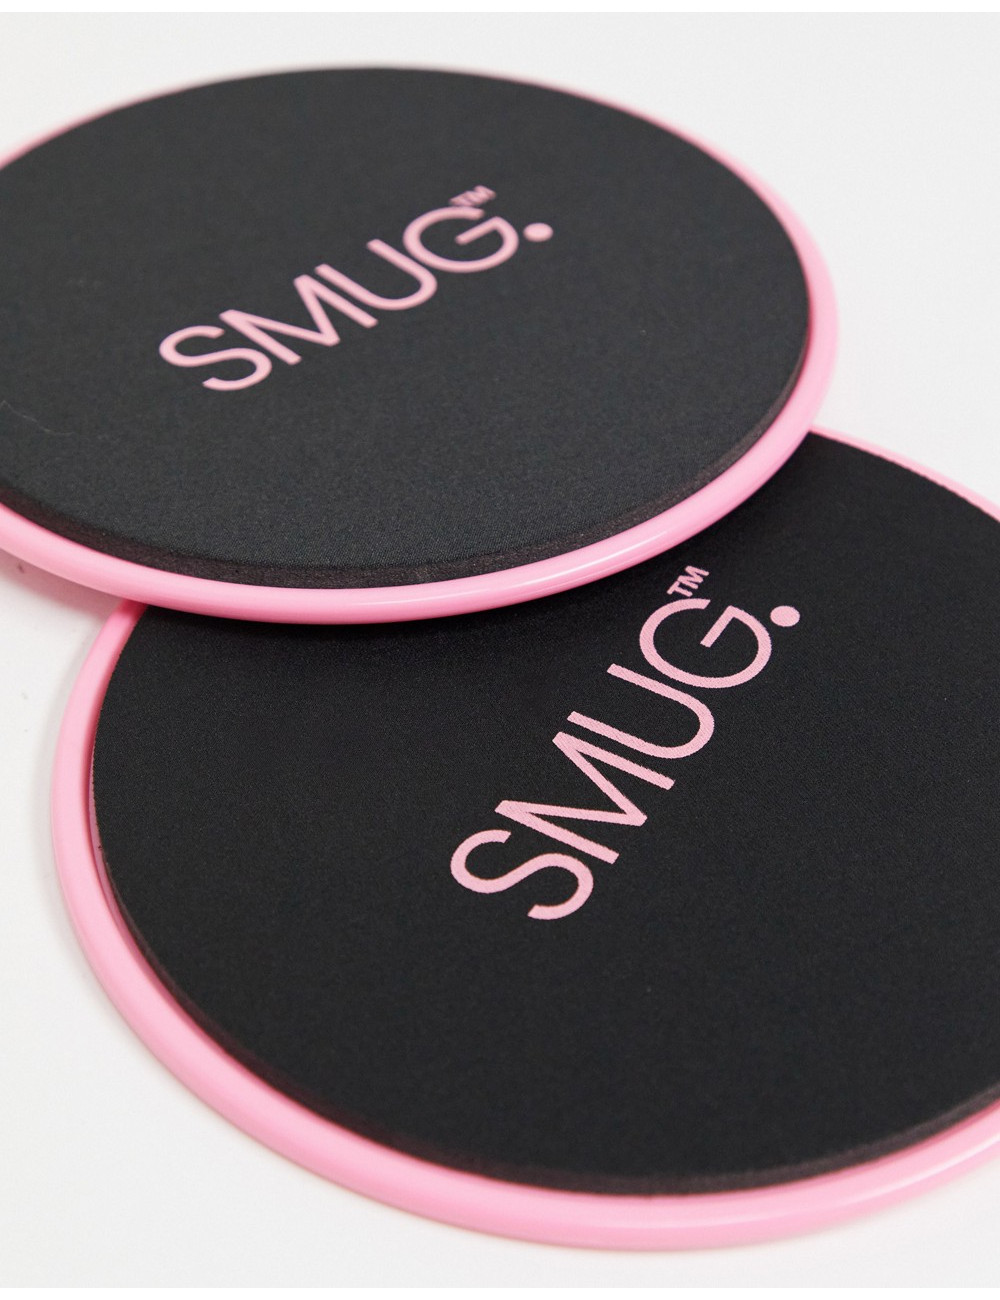 SMUG Core Sliders in black...